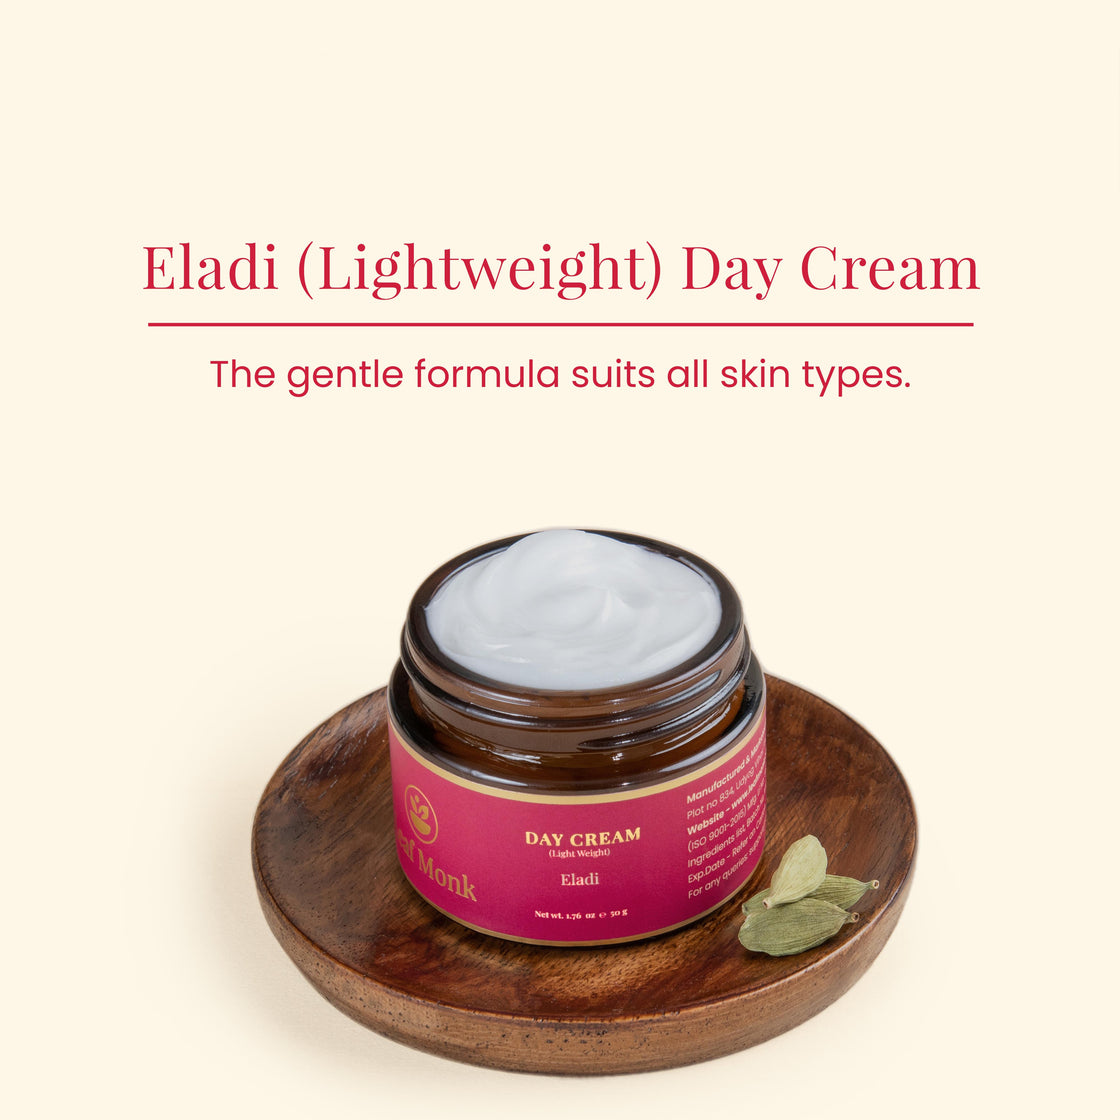 Eladi (Lightweight) Day Cream